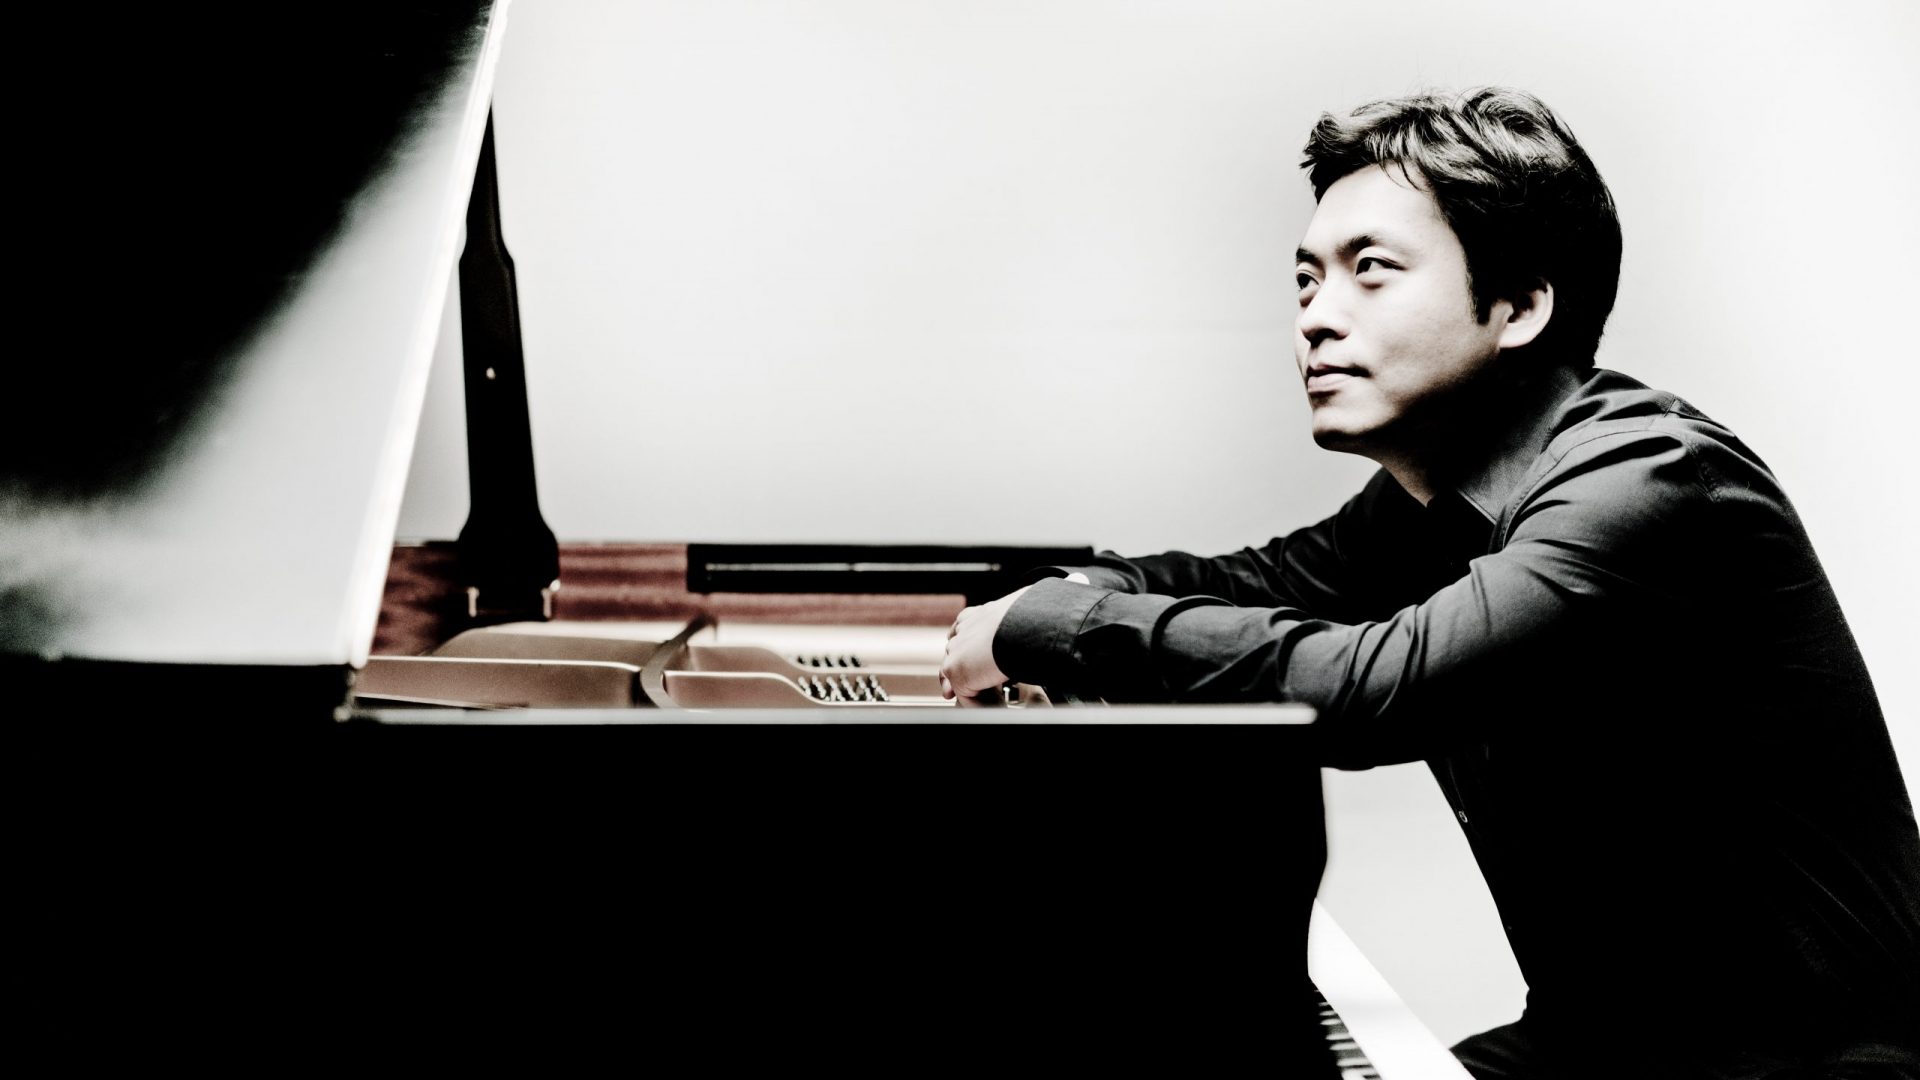 Sunwook Kim sitting at a Piano